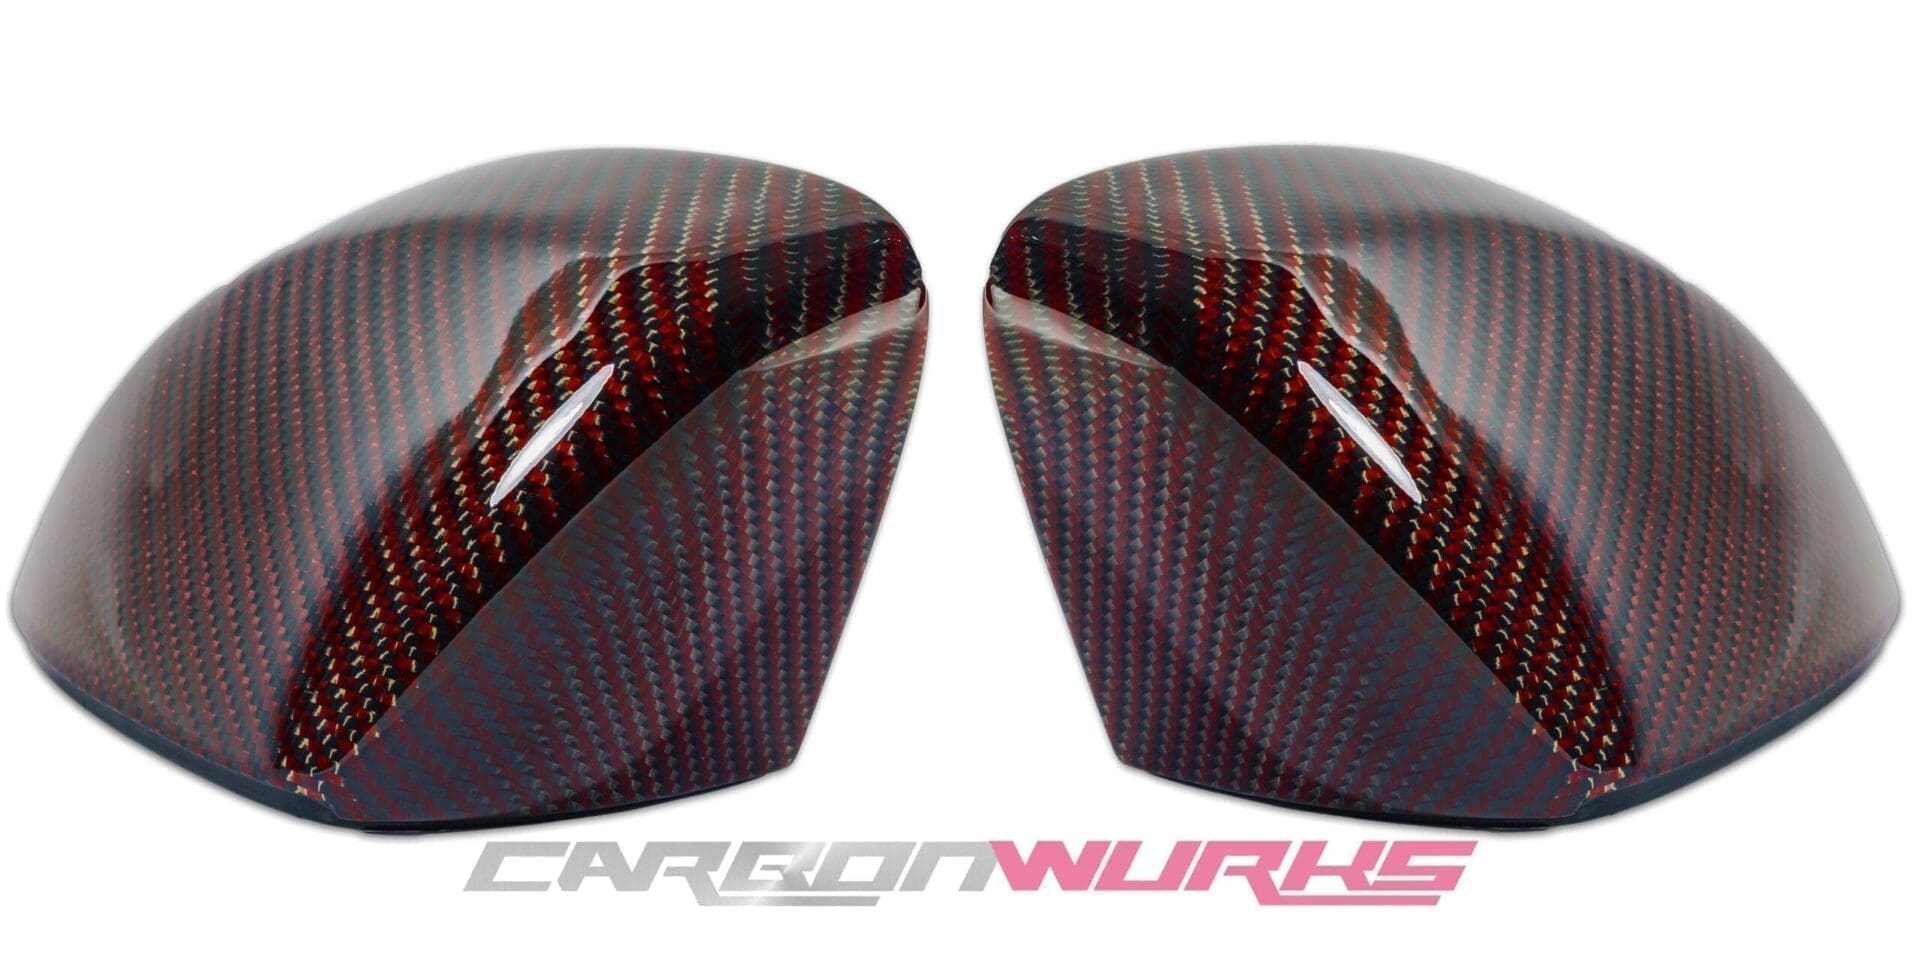 Audi A3 Red Carbon Fibre Mirrors - Without Lane Assist - Exclusive Range 1